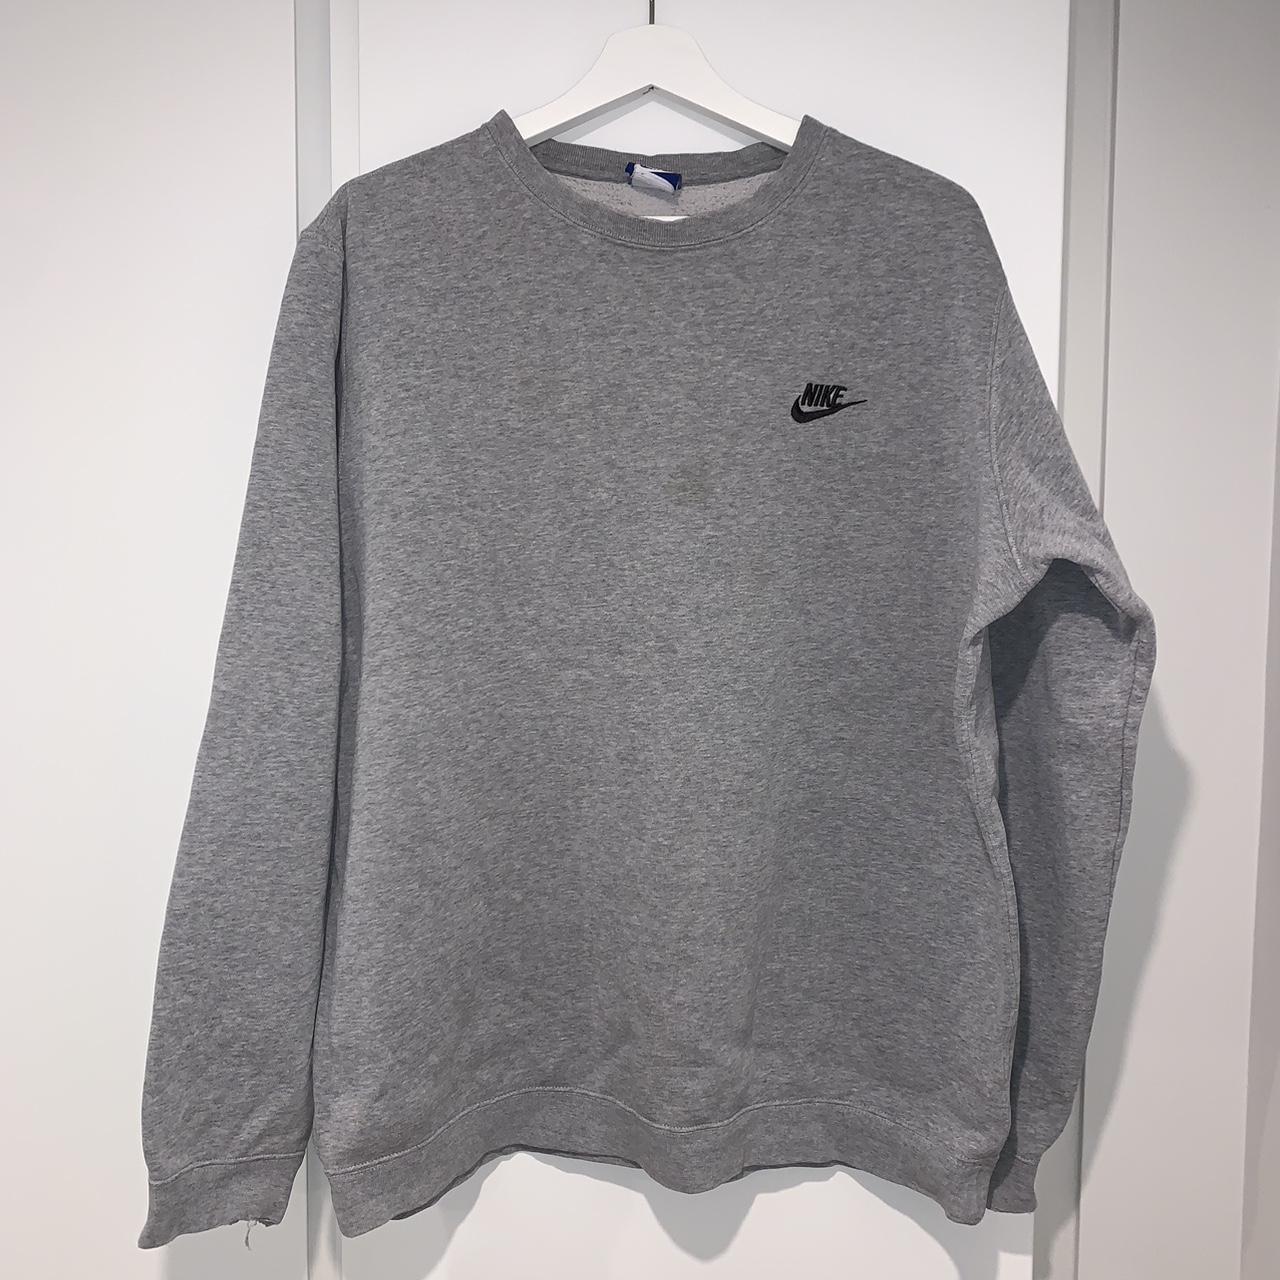 Grey Nike sweater - Depop